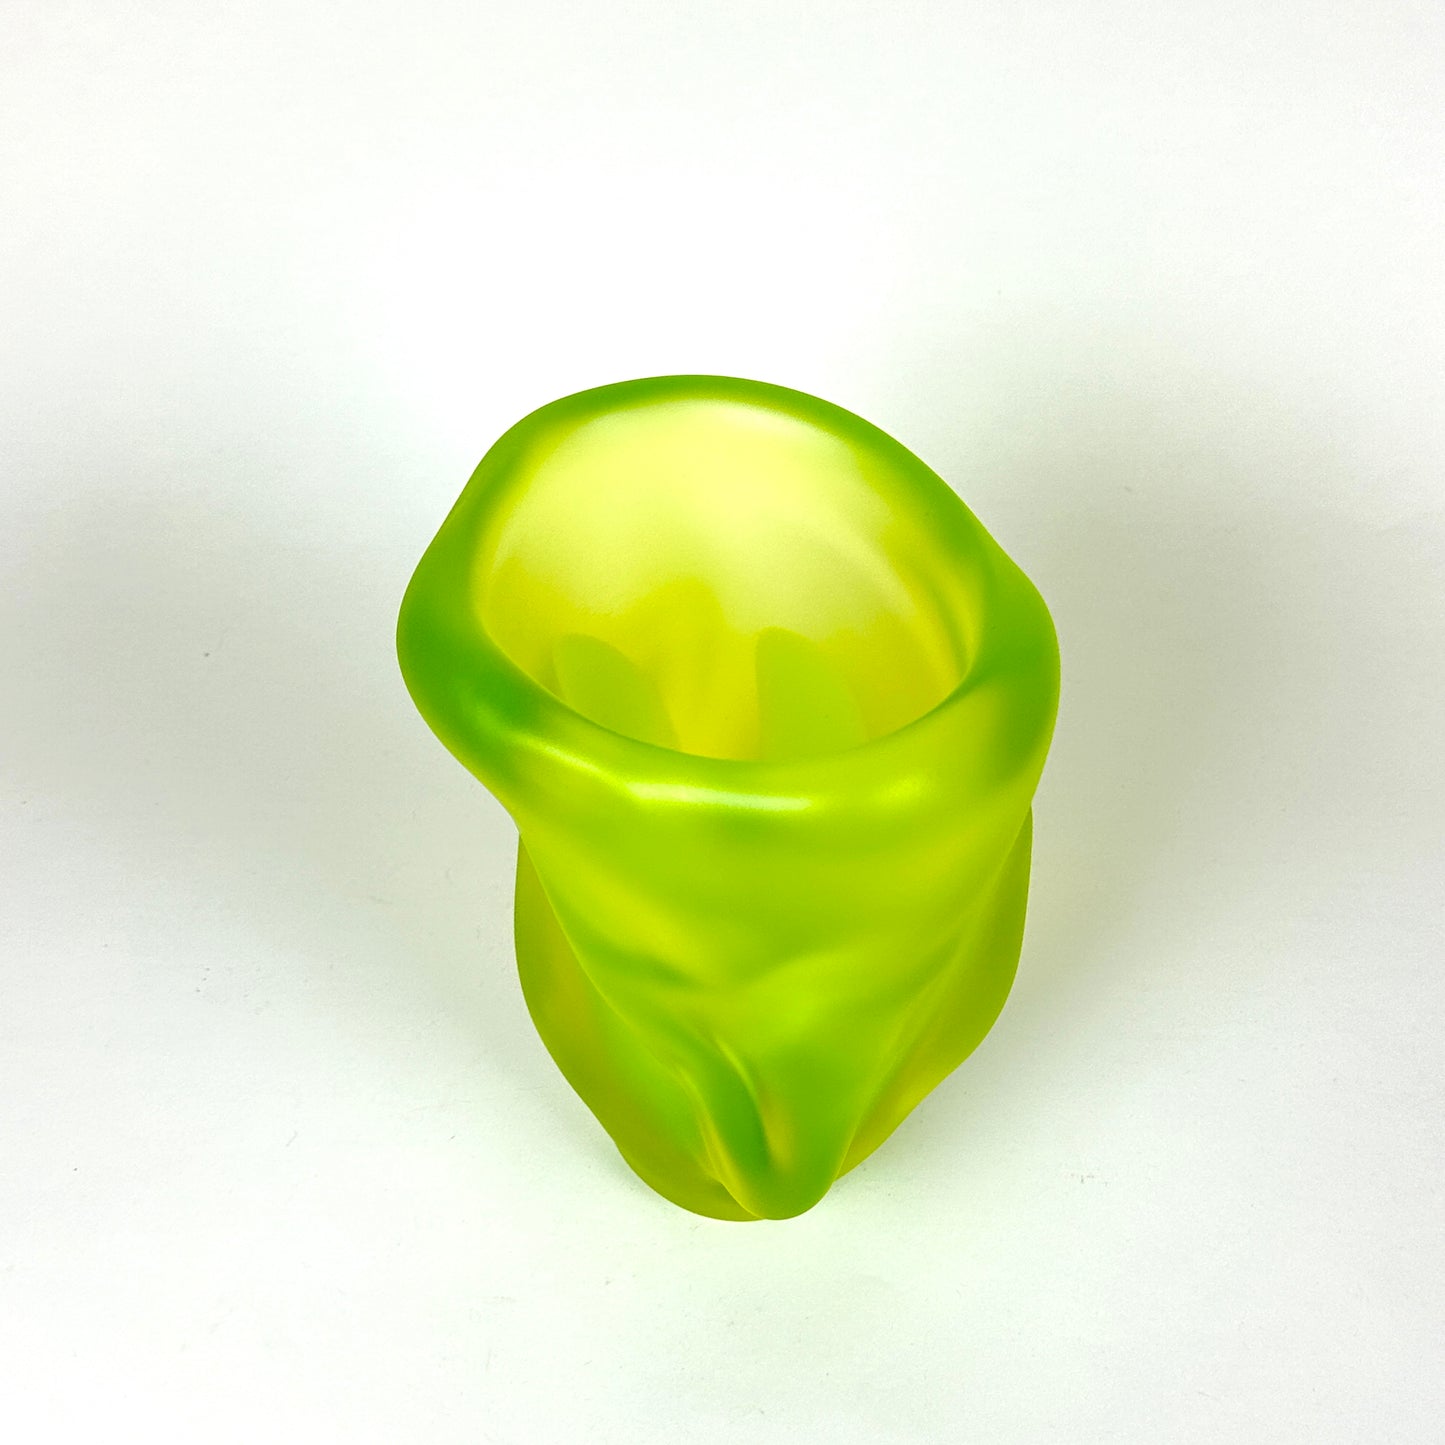 Uranium glass vase by Hana Hillerova